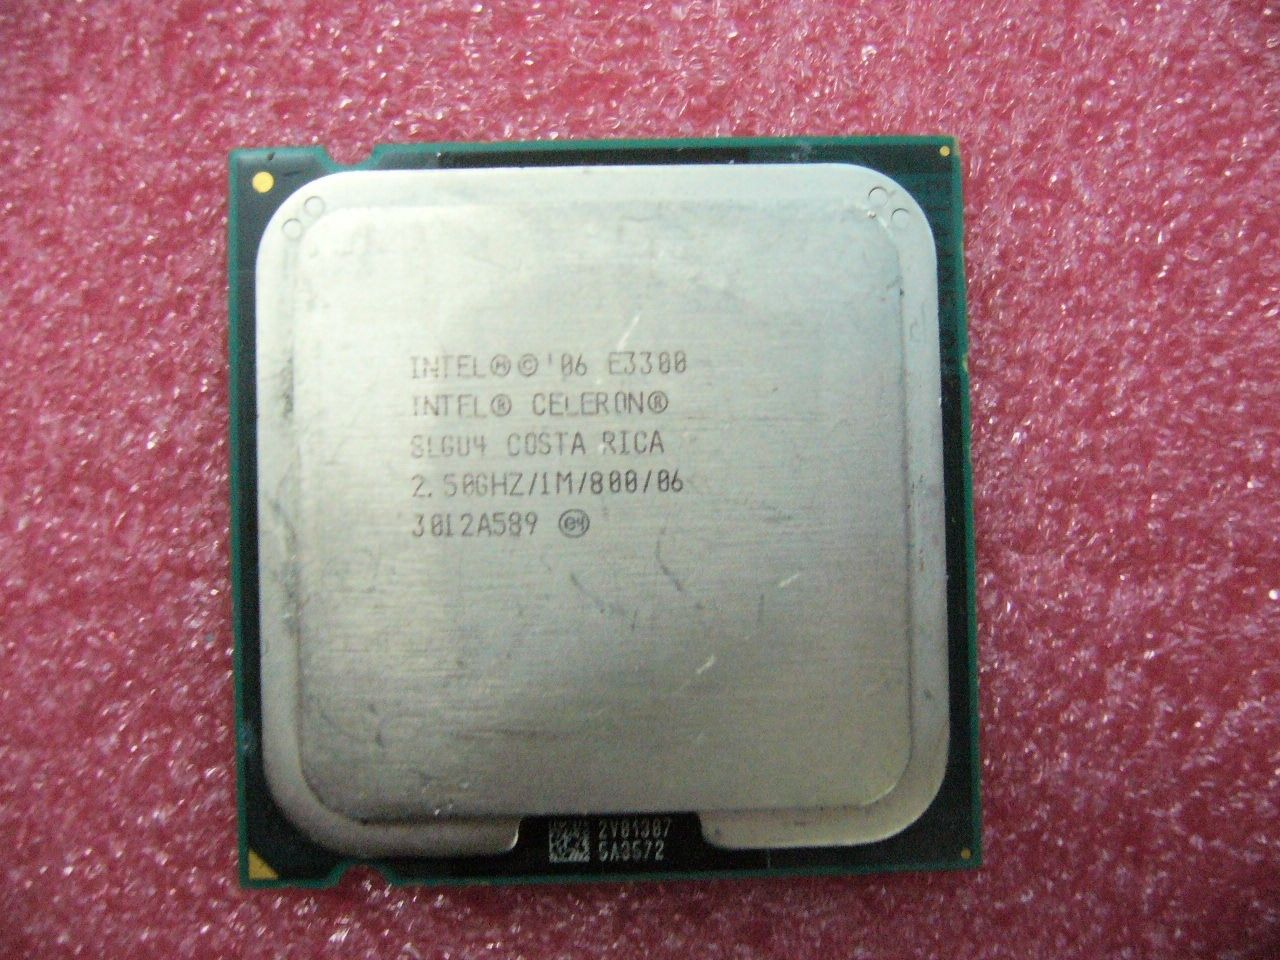 QTY 1x INTEL Celeron E3300 CPU 2.5GHz/1MB/800Mhz LGA775 SLGU4